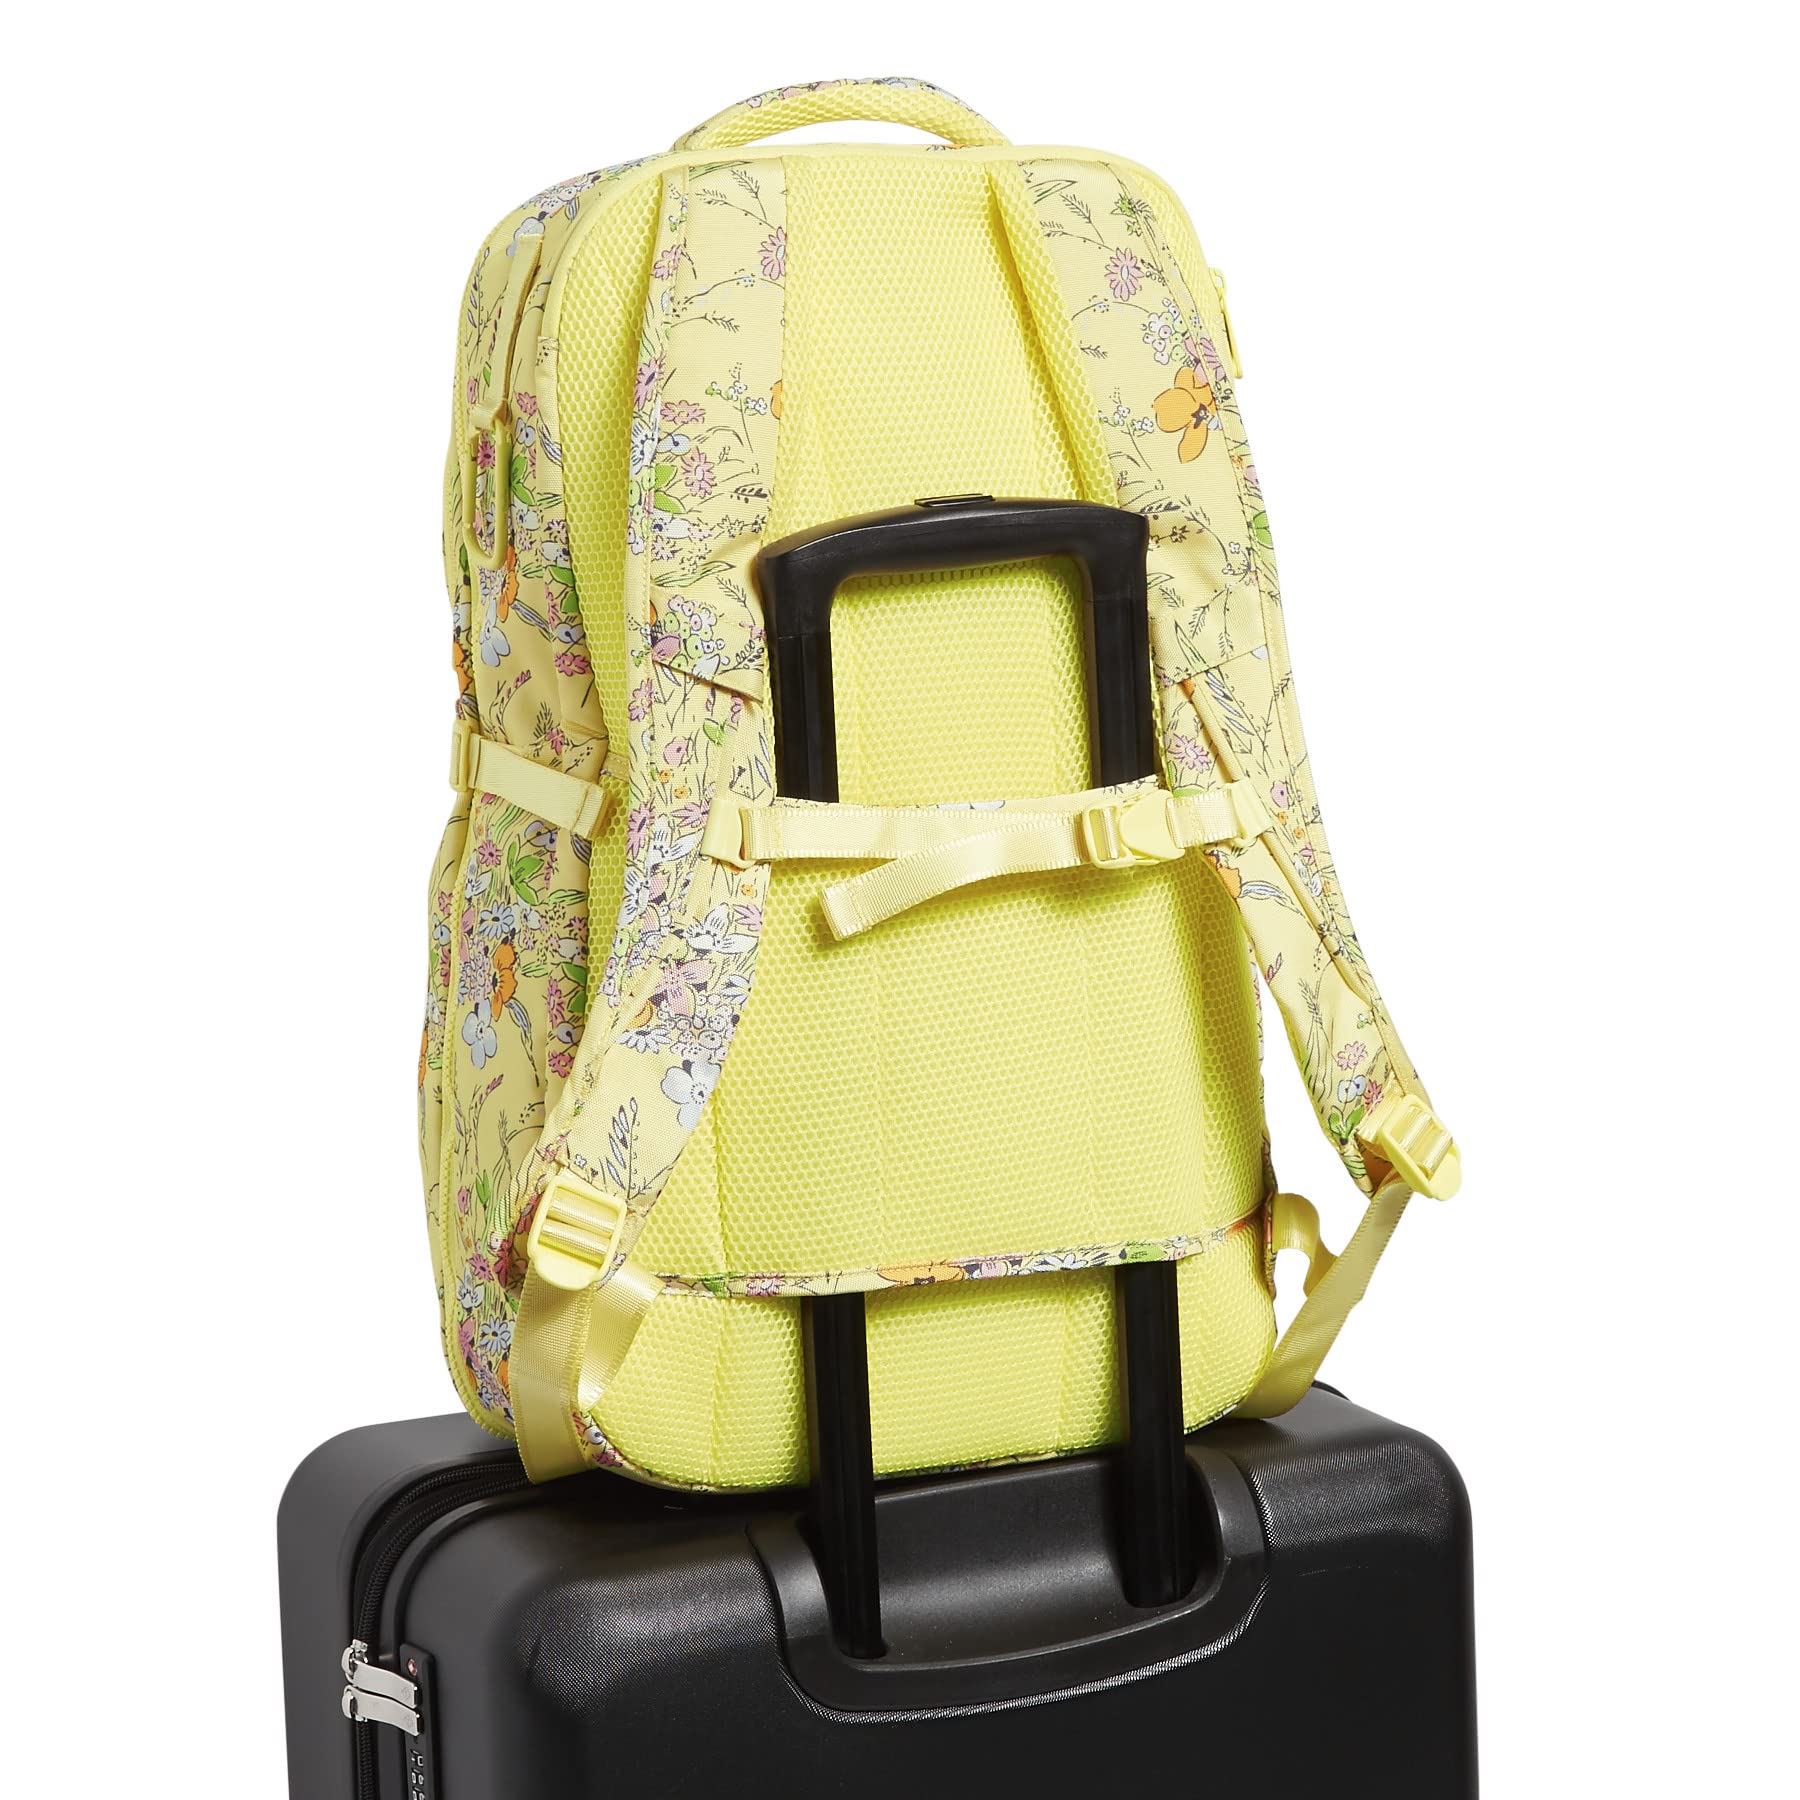 Vera Bradley Women's Recycled Lighten Up Reactive Lay Flat Travel Backpack, Sunlit Garden, One Size